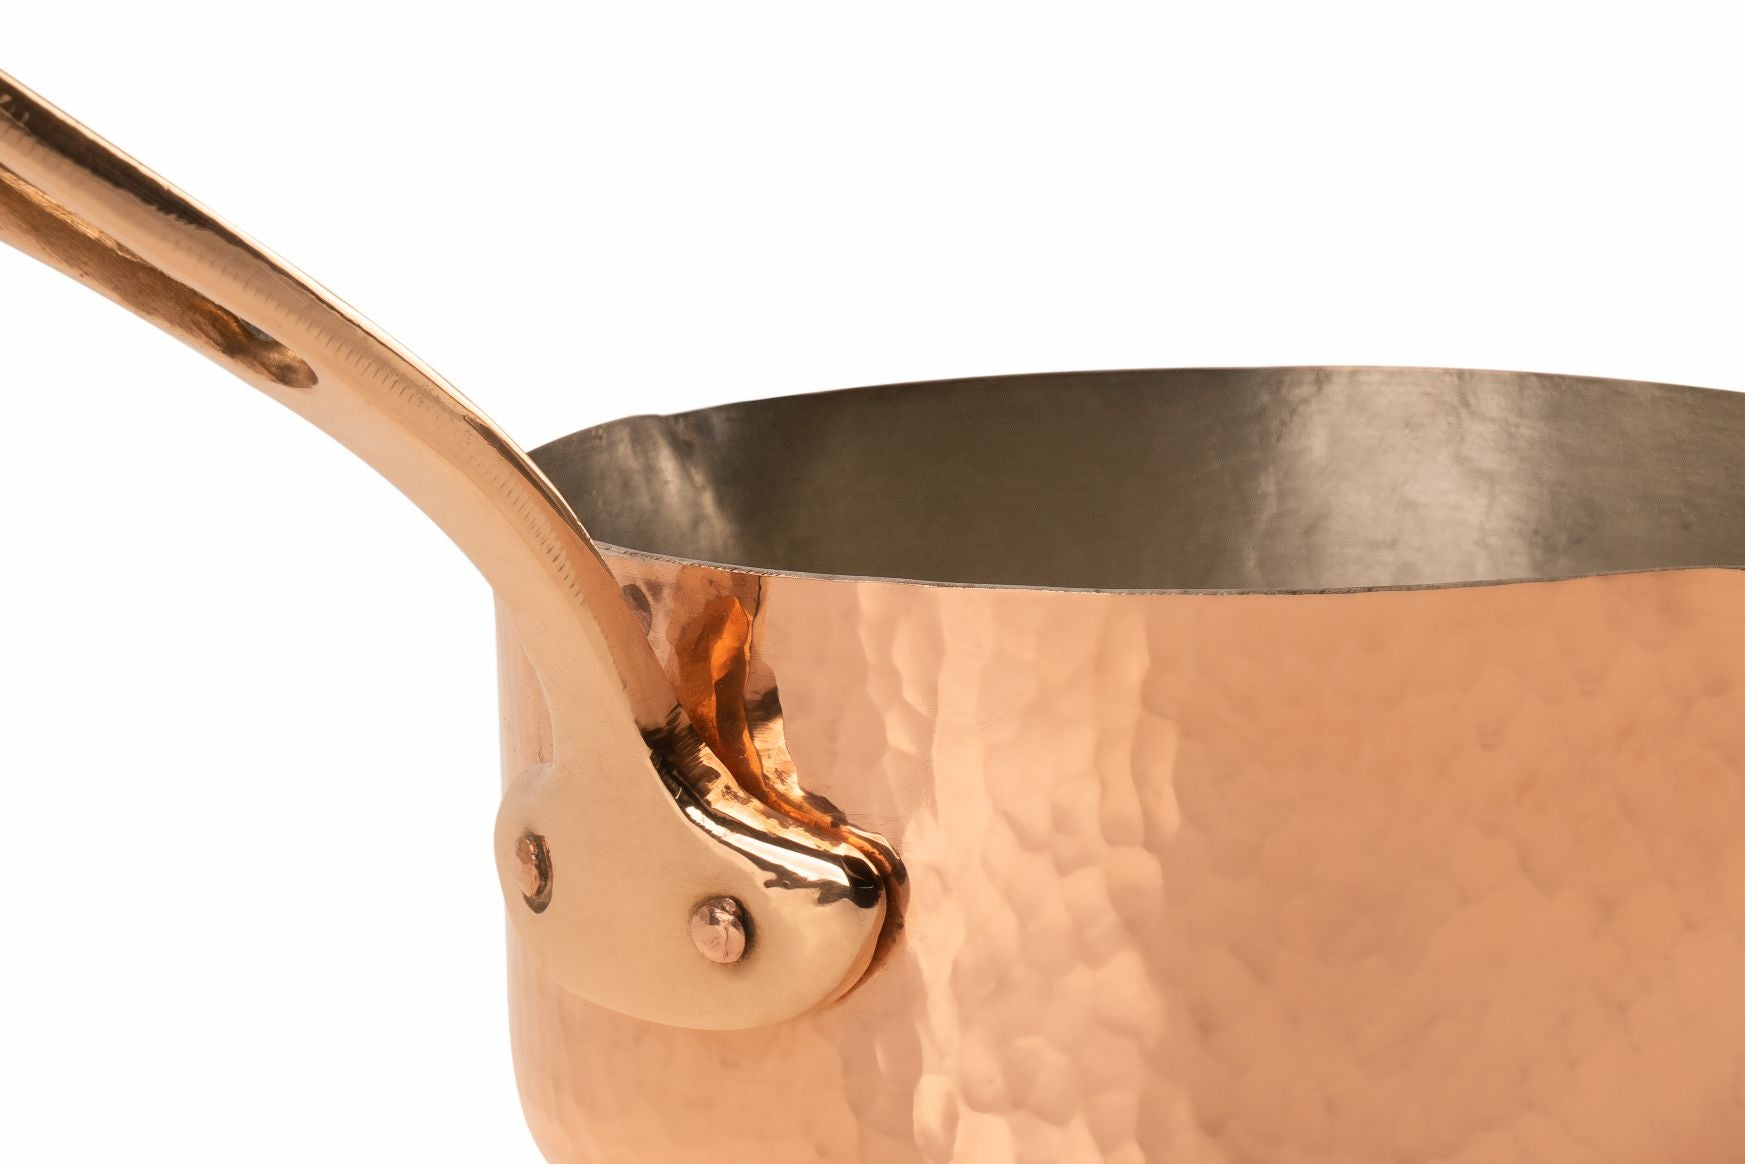  DESTALYA Copper Pan 7.08'' Hammered Handmade Authentic